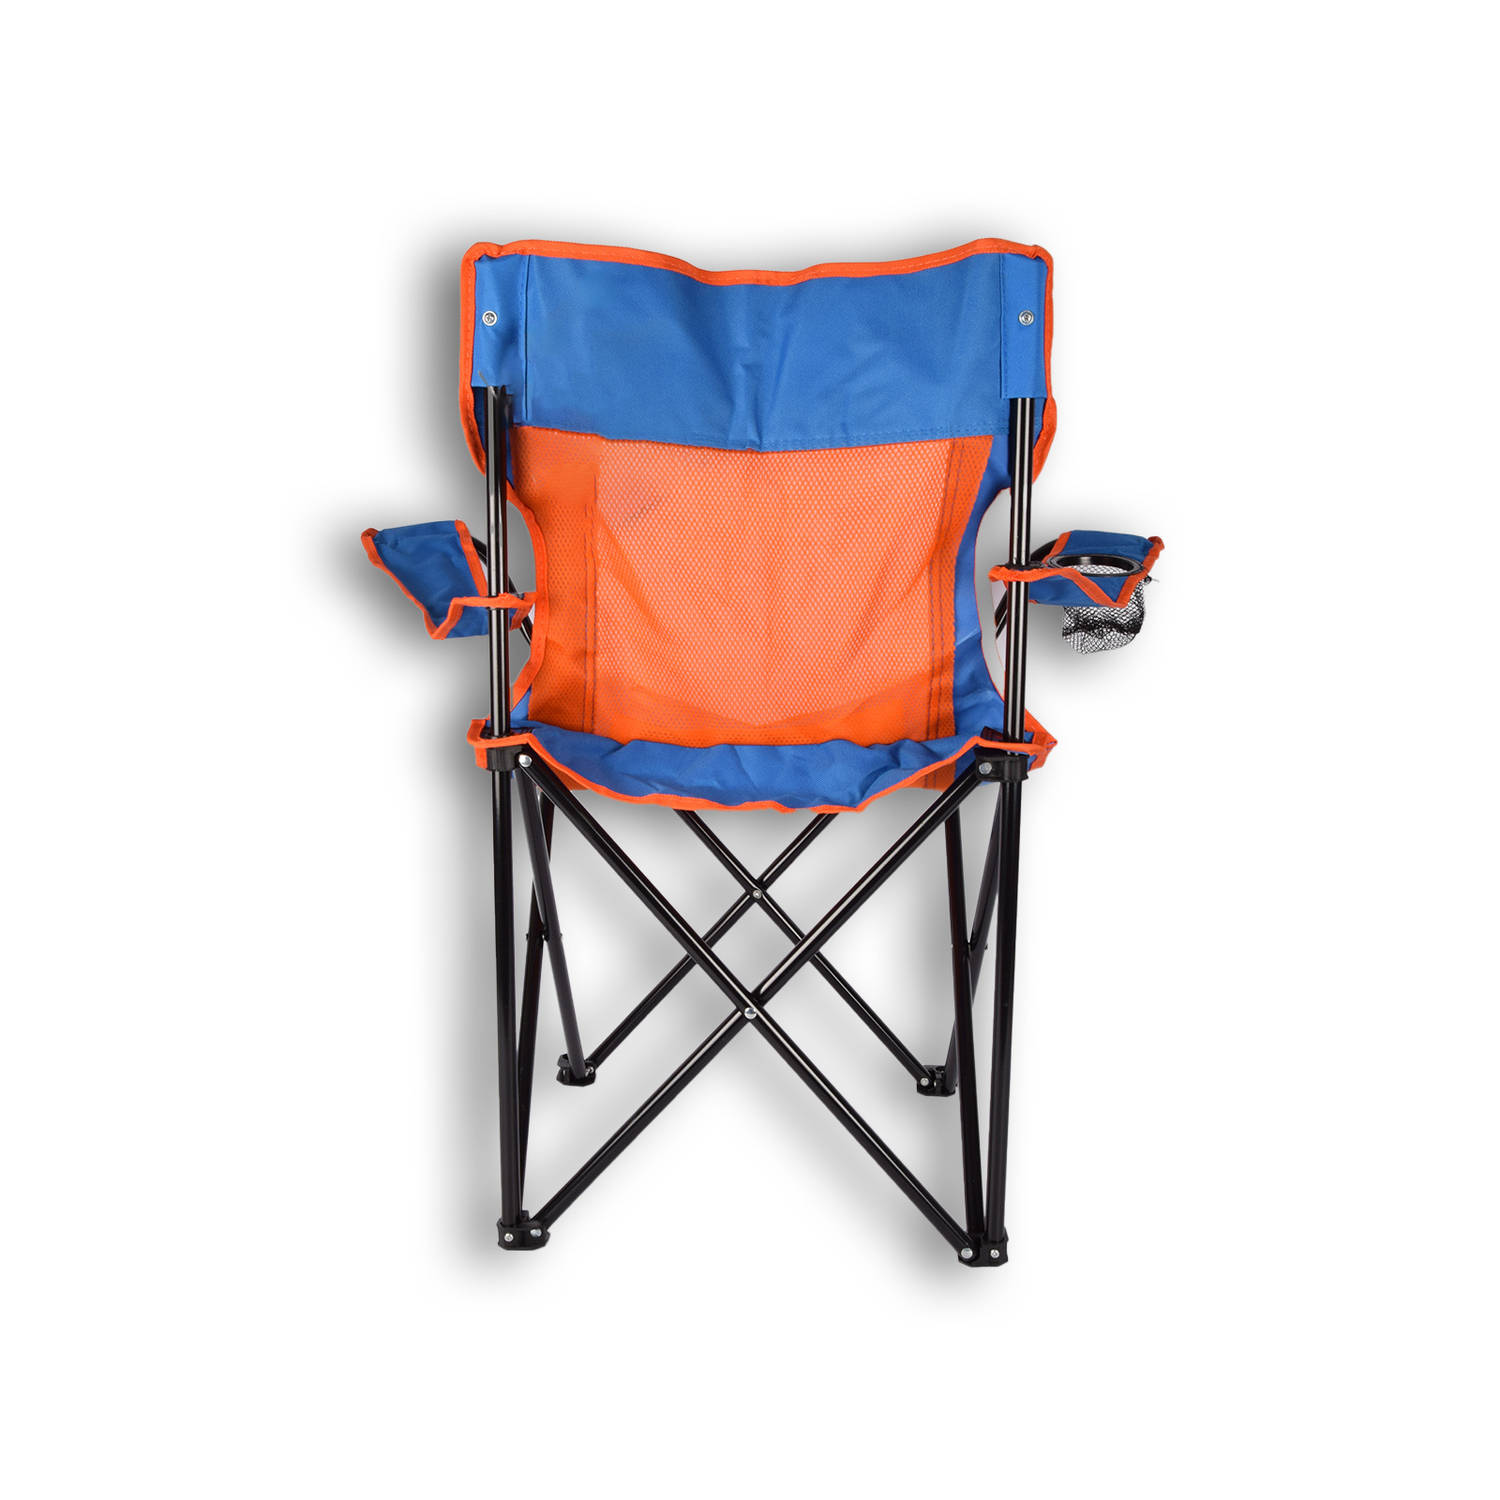 BOBO Camp - Campingstoel - Vouwstoel - Rood - blauw opvouwbare stoel 50X50X80CM